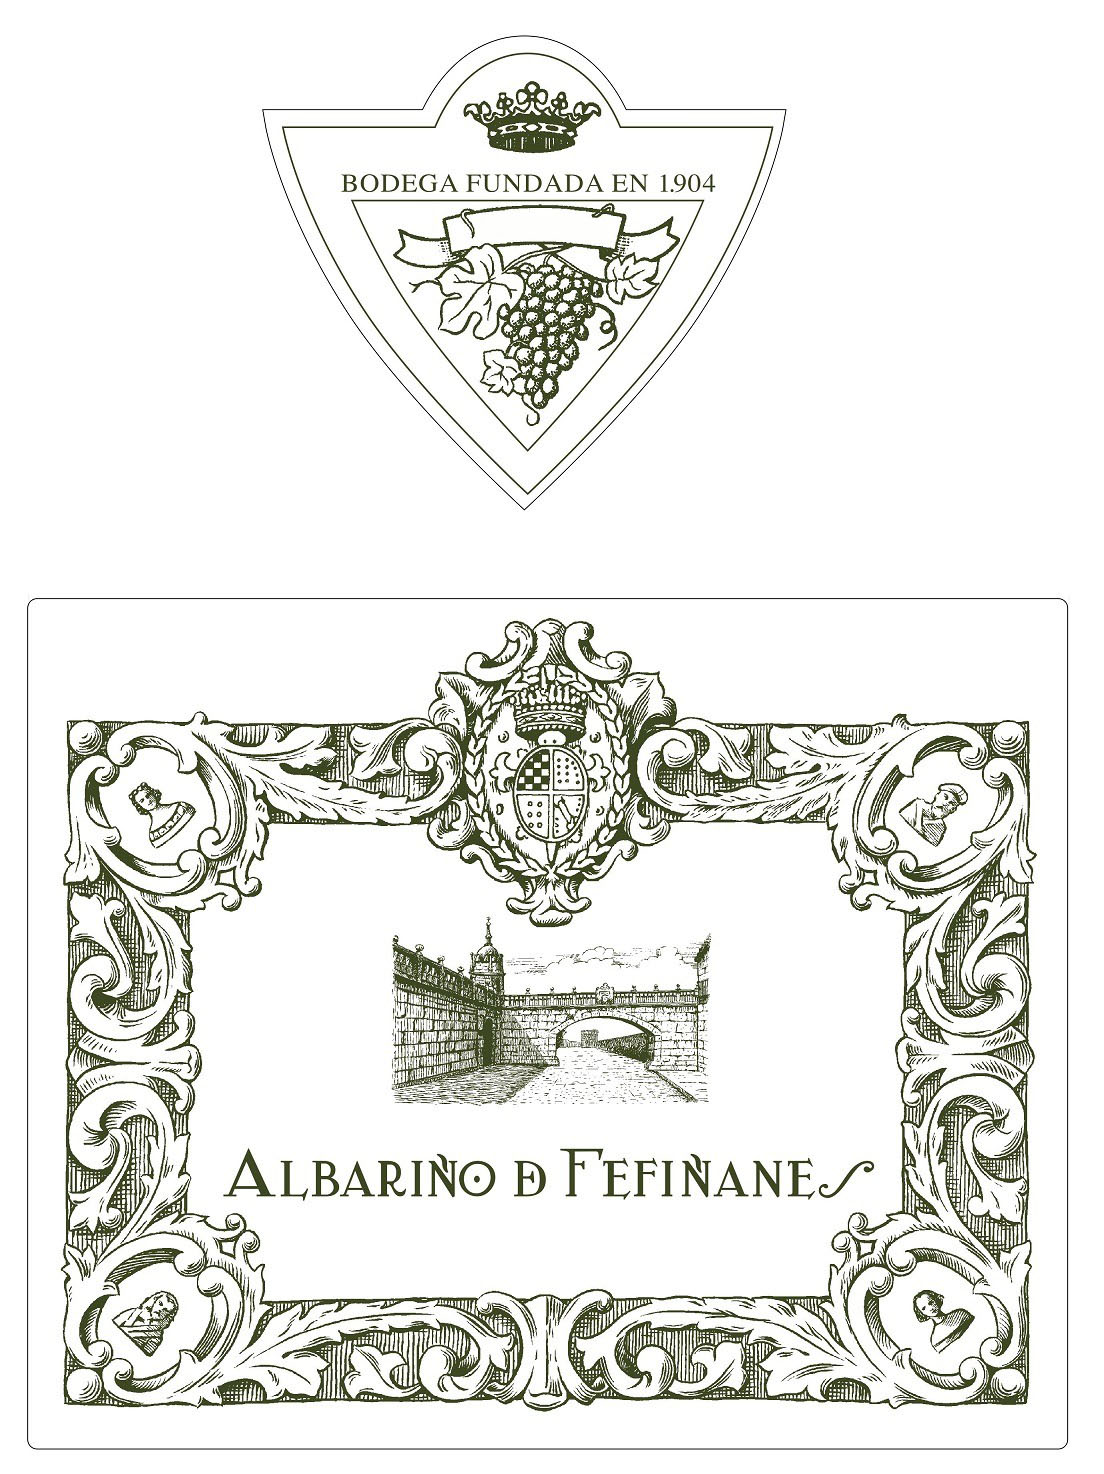 States - 2022 Order Wines Albarino Wines Cabernet Savignon - the Port - Wines Timeless Spanish | - de California Online Wines United from Chardonnay French - - Fefinanes Albarino - Wine